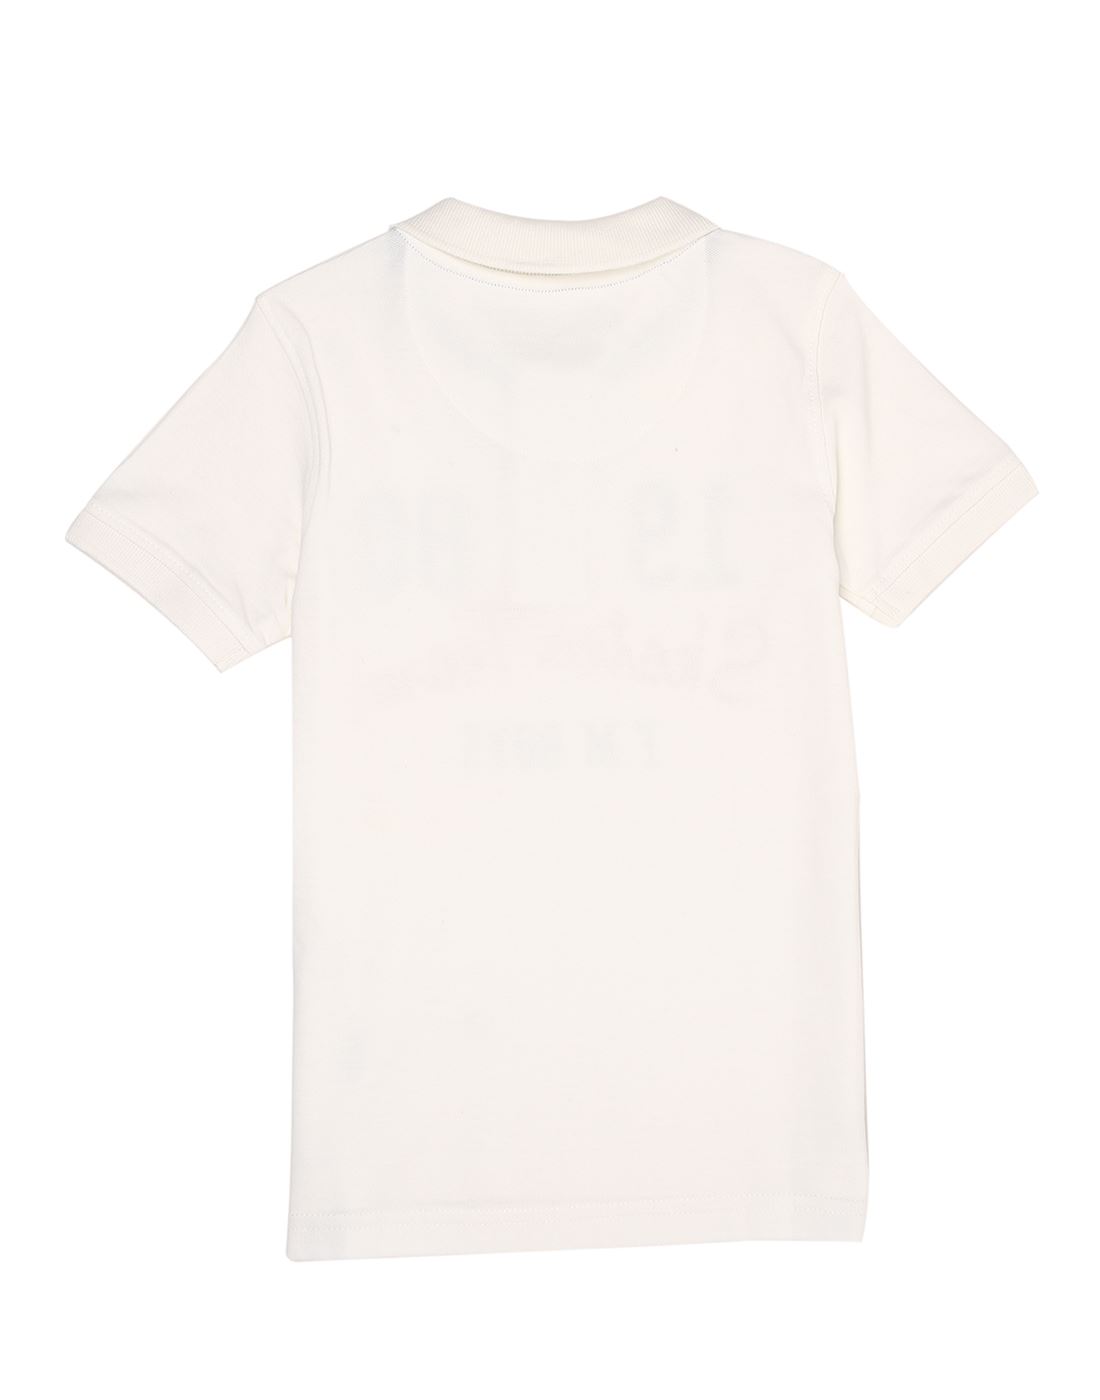 Flying Machine Boys Casual Wear Graphic Print White T-Shirt